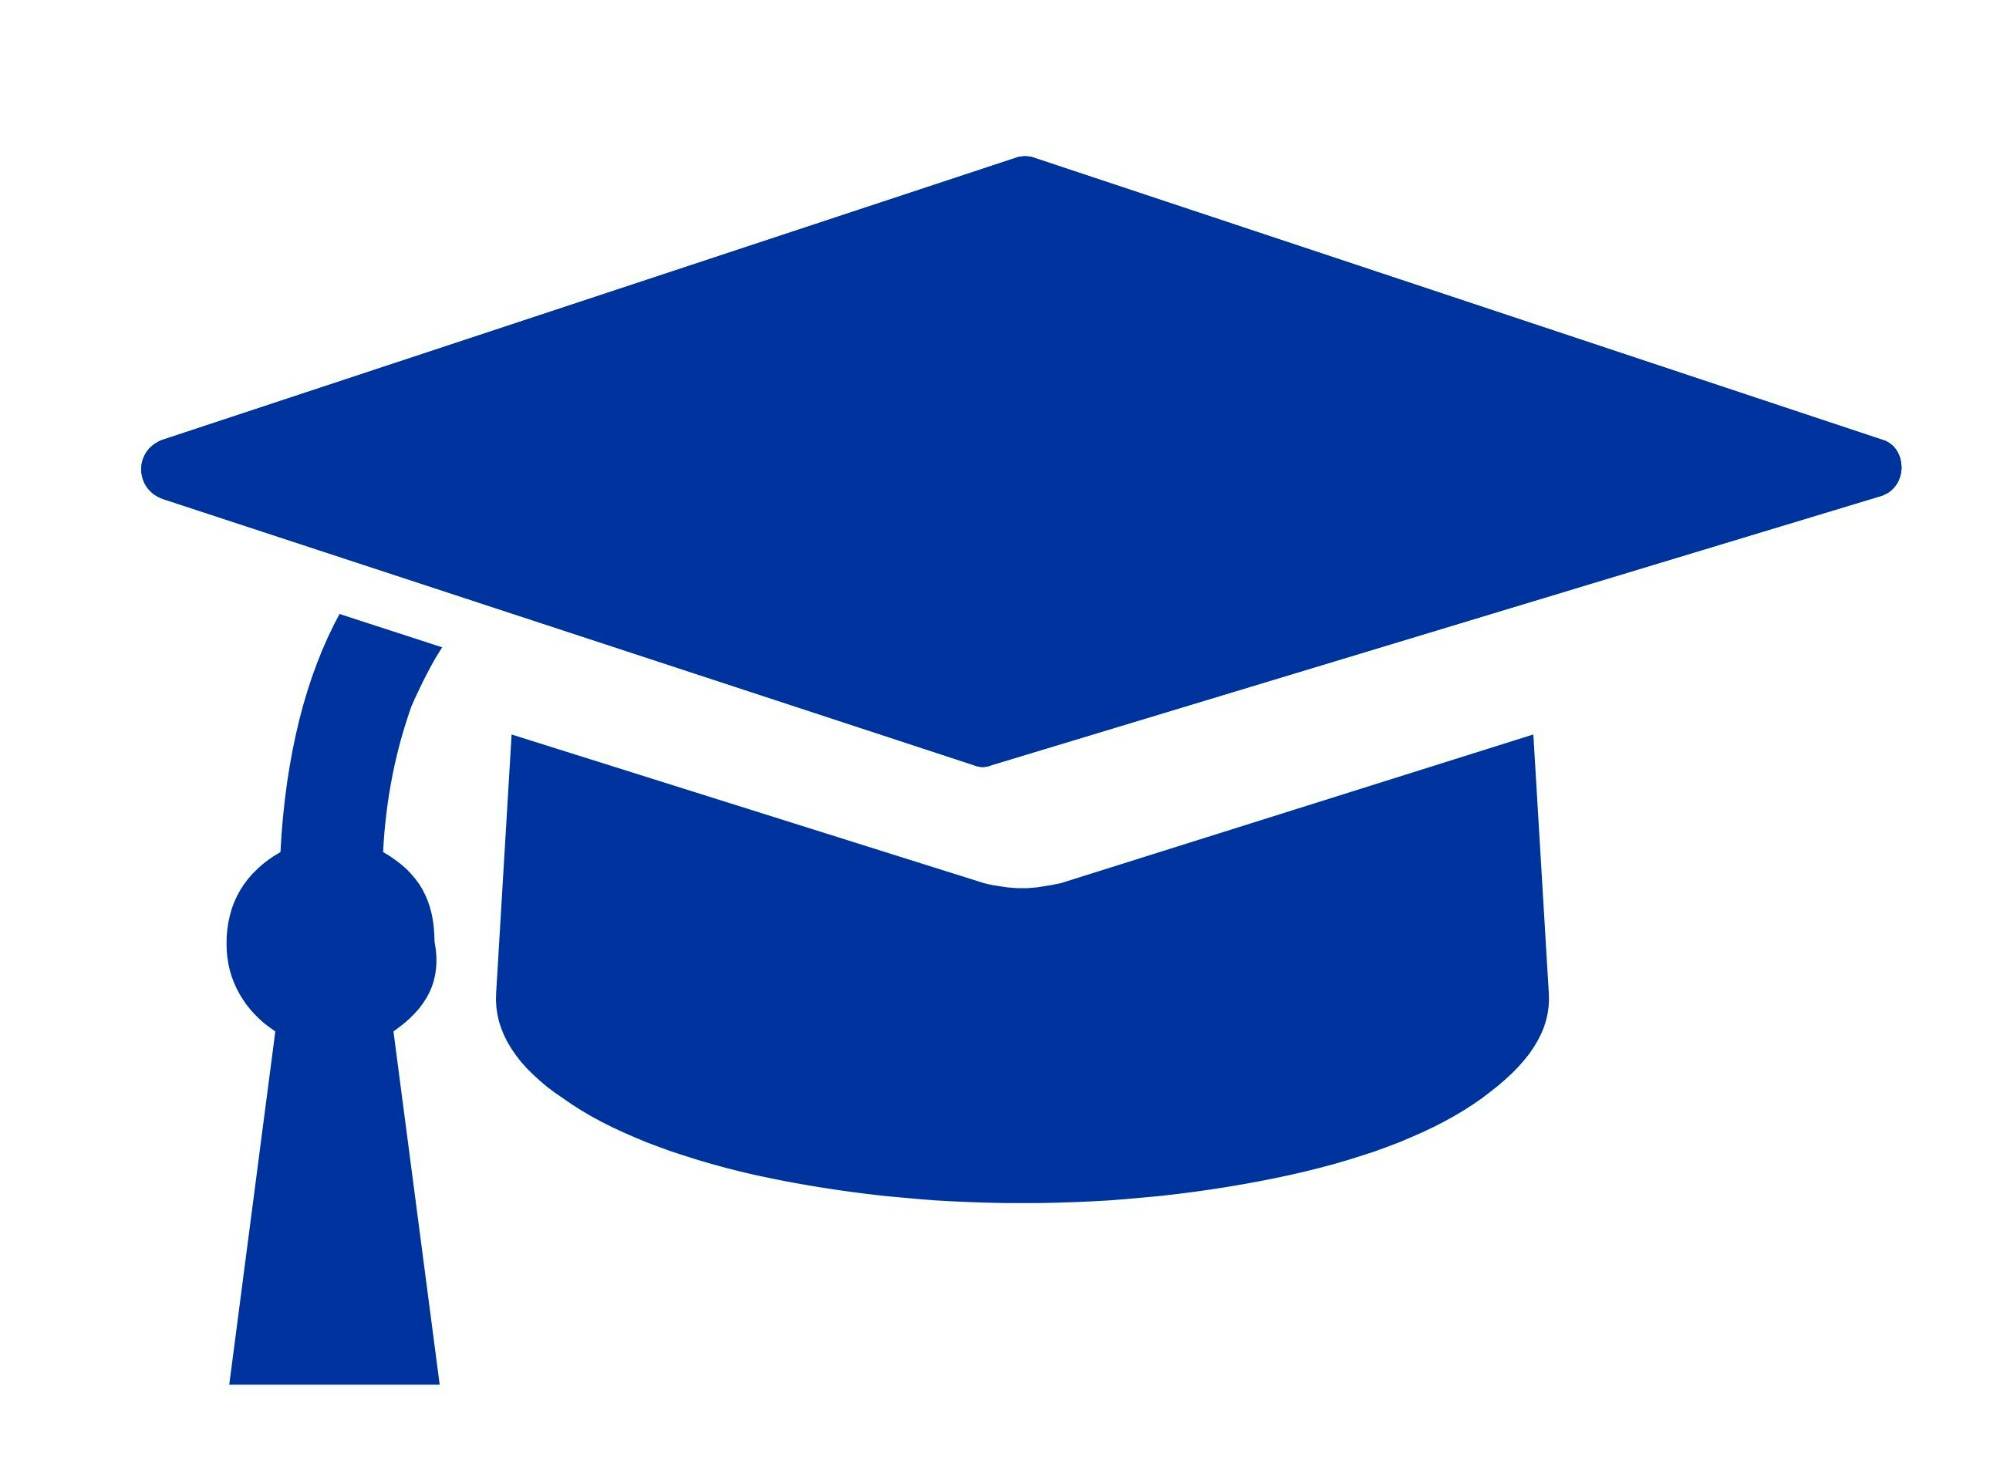 Graduate Student Organization